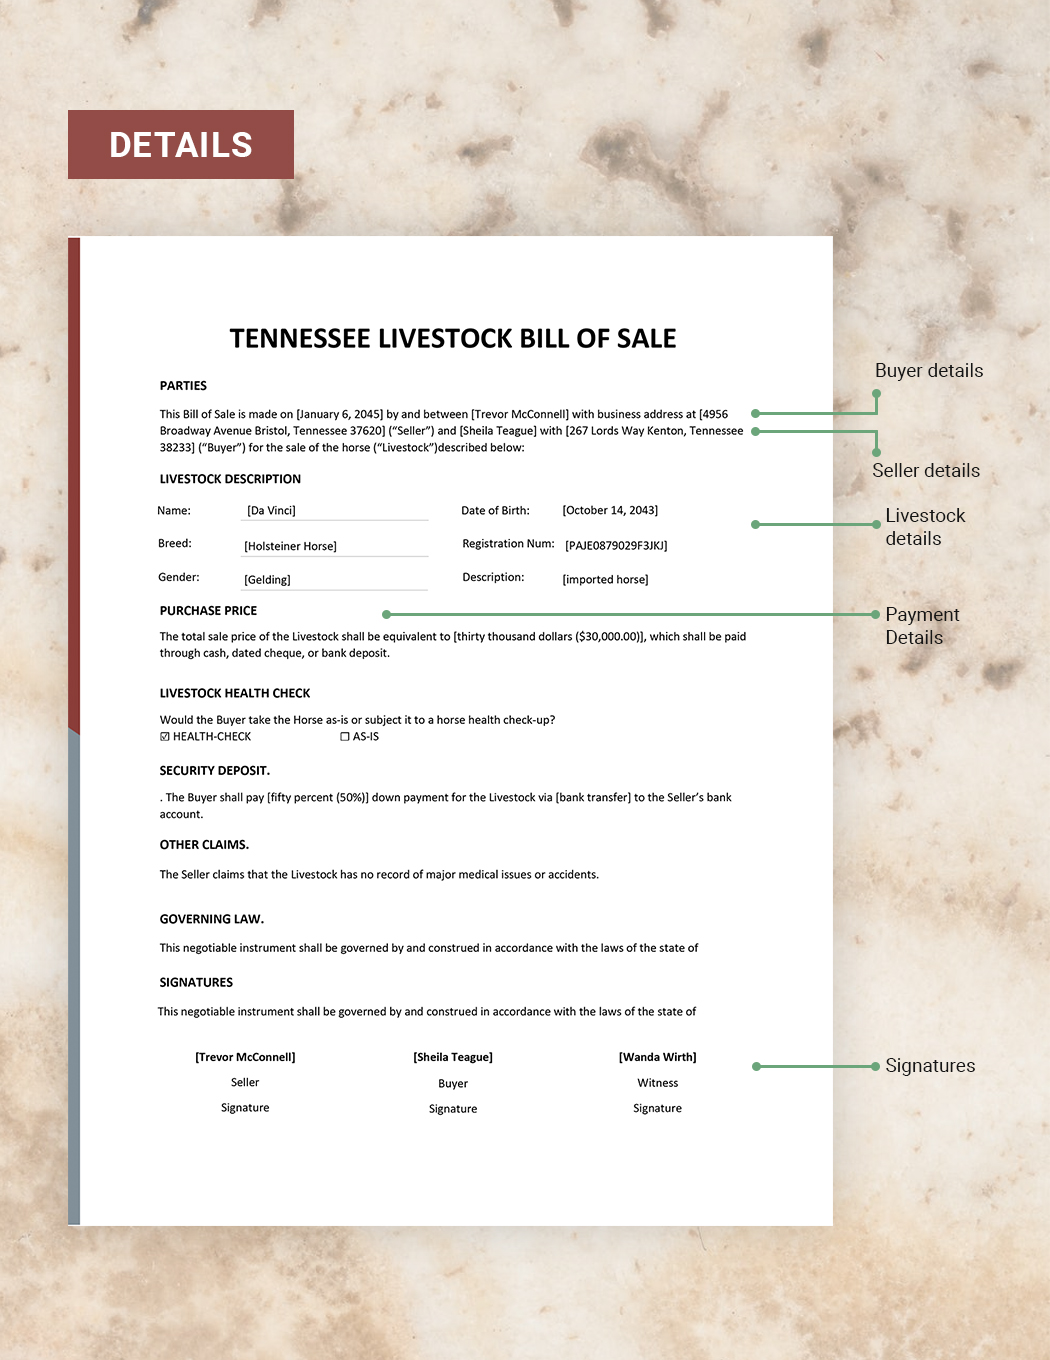 Tennessee Livestock Bill of Sale Template